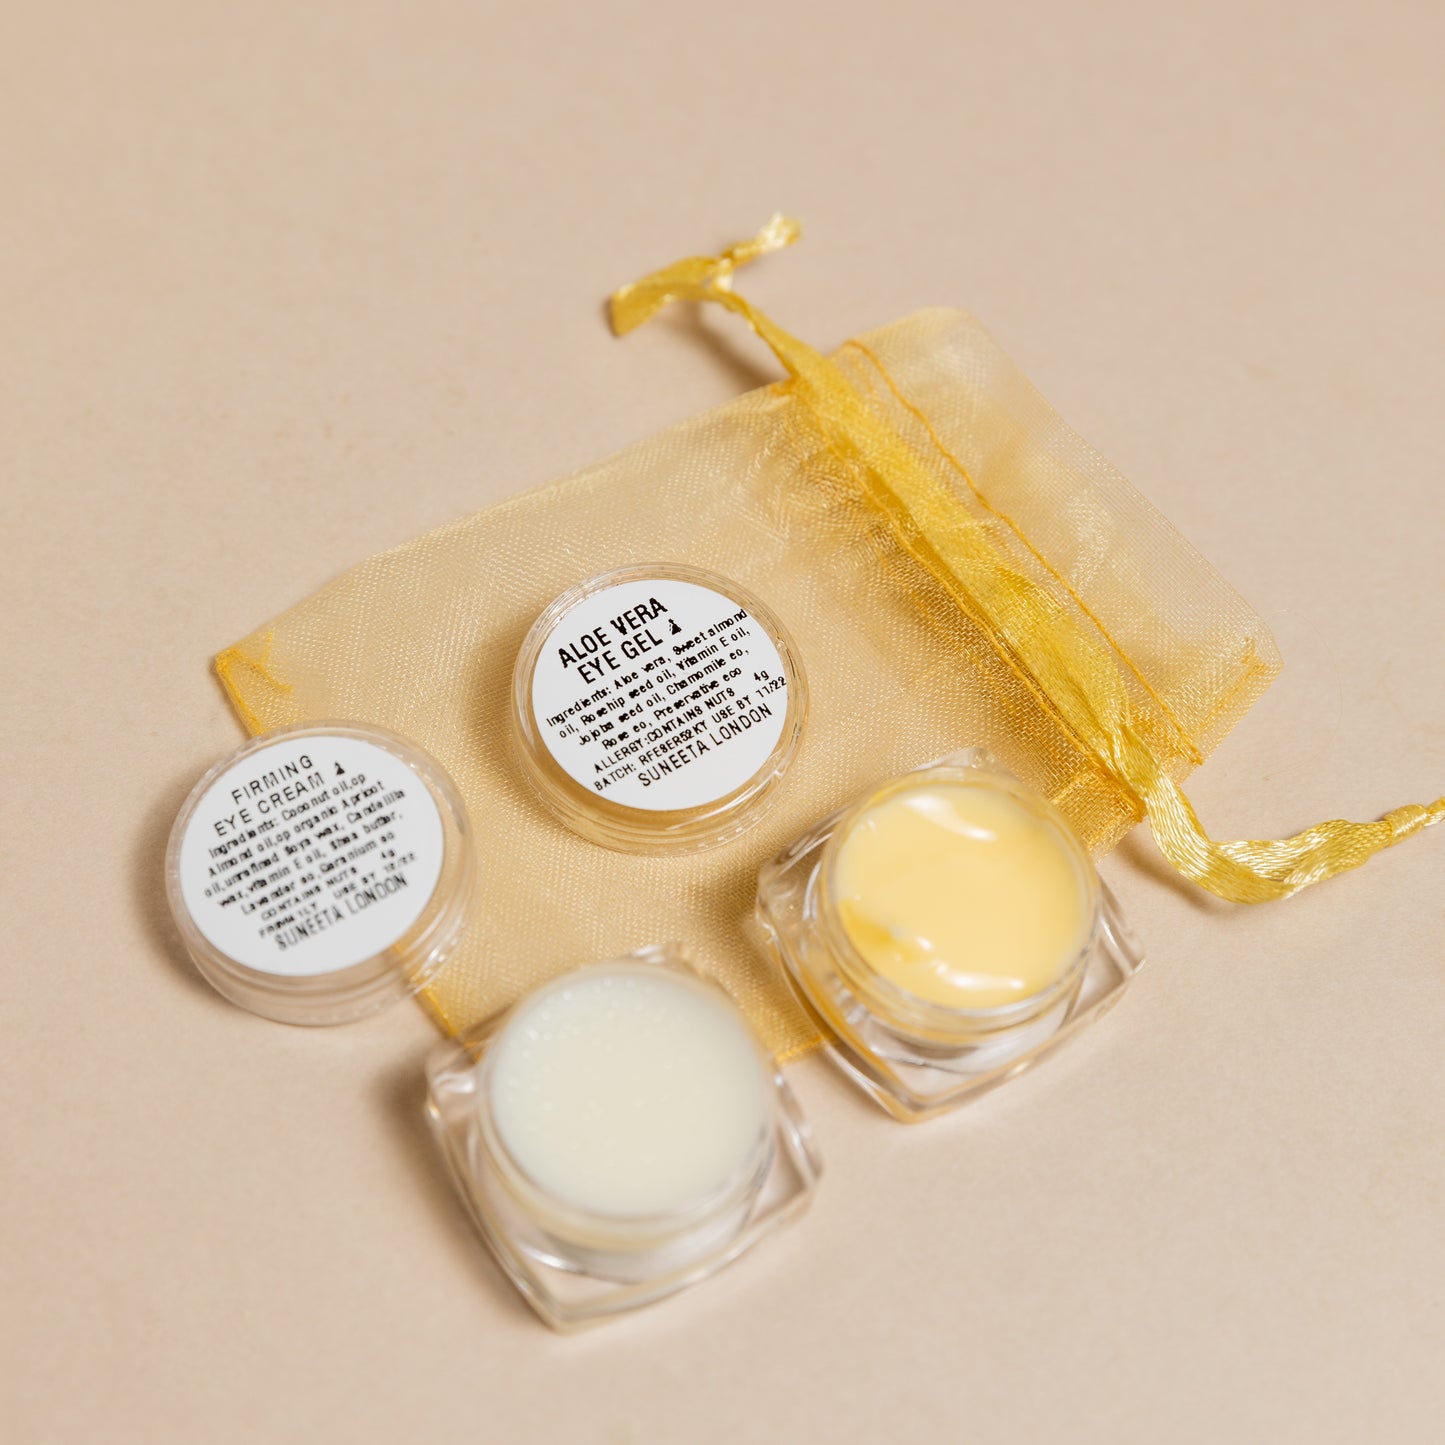 eye gel and eye cream sample